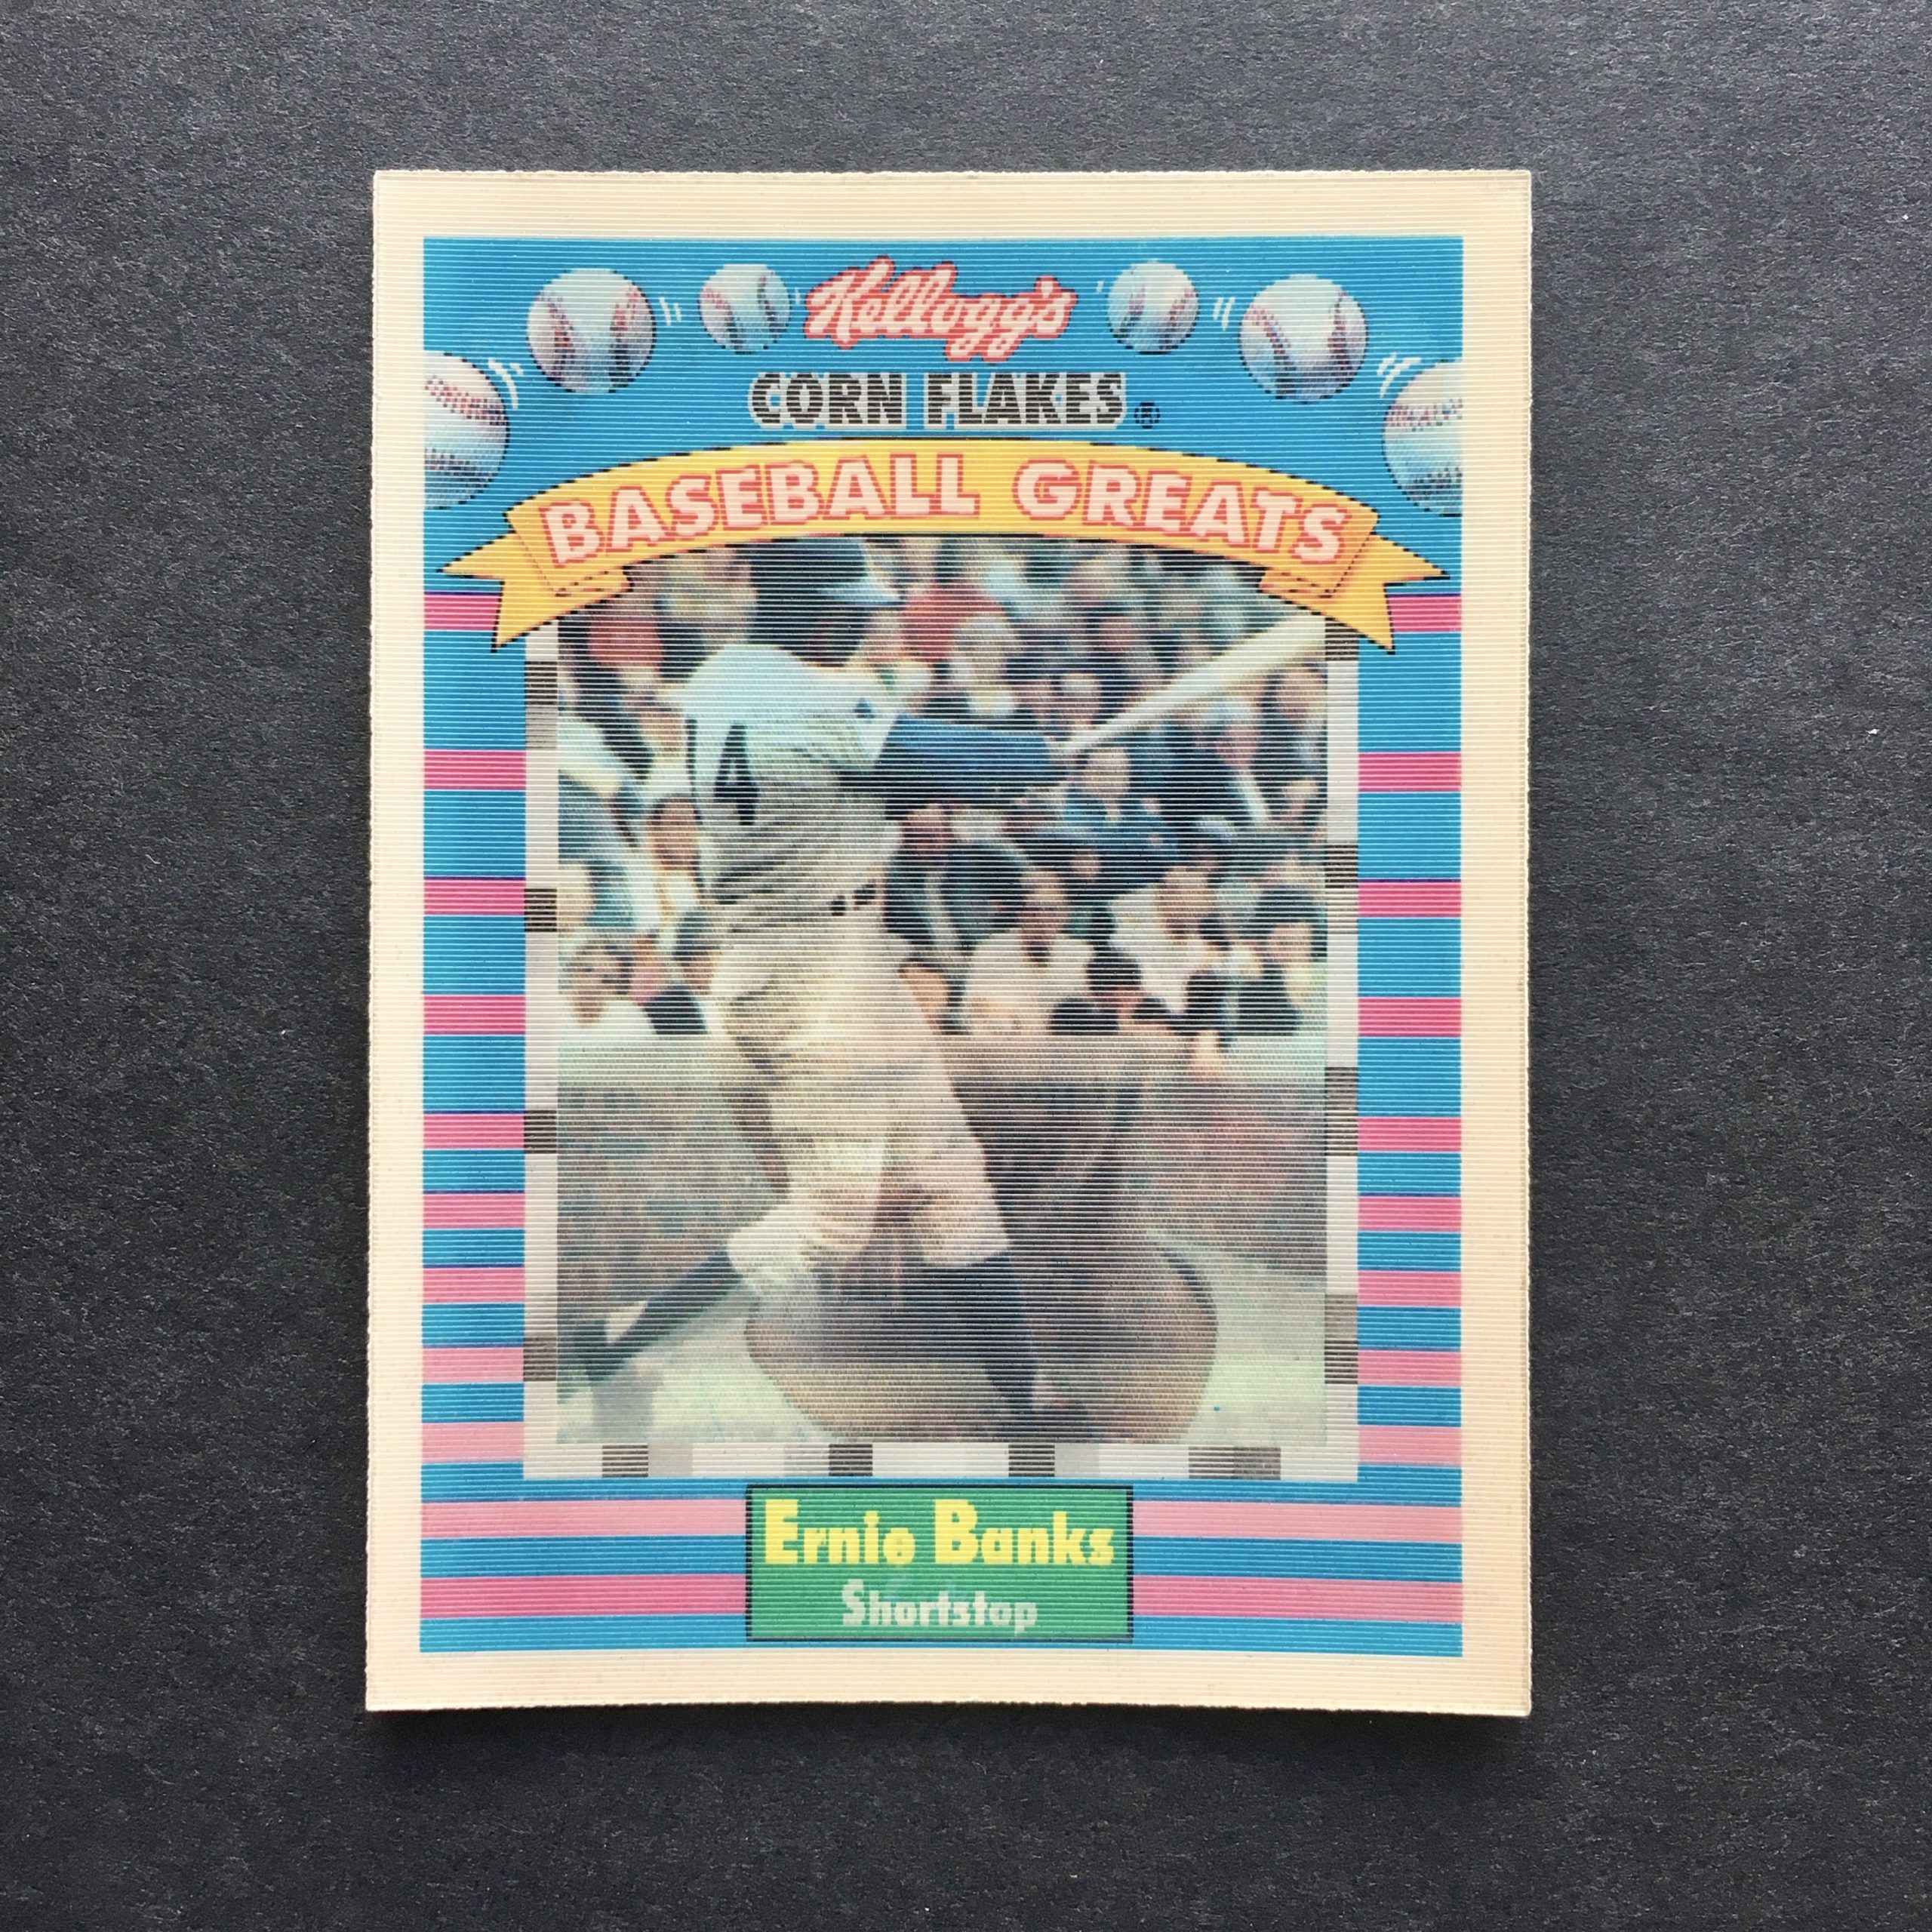 Ernie Banks 1991 Kellogg's Corn Flakes Baseball Greats Card